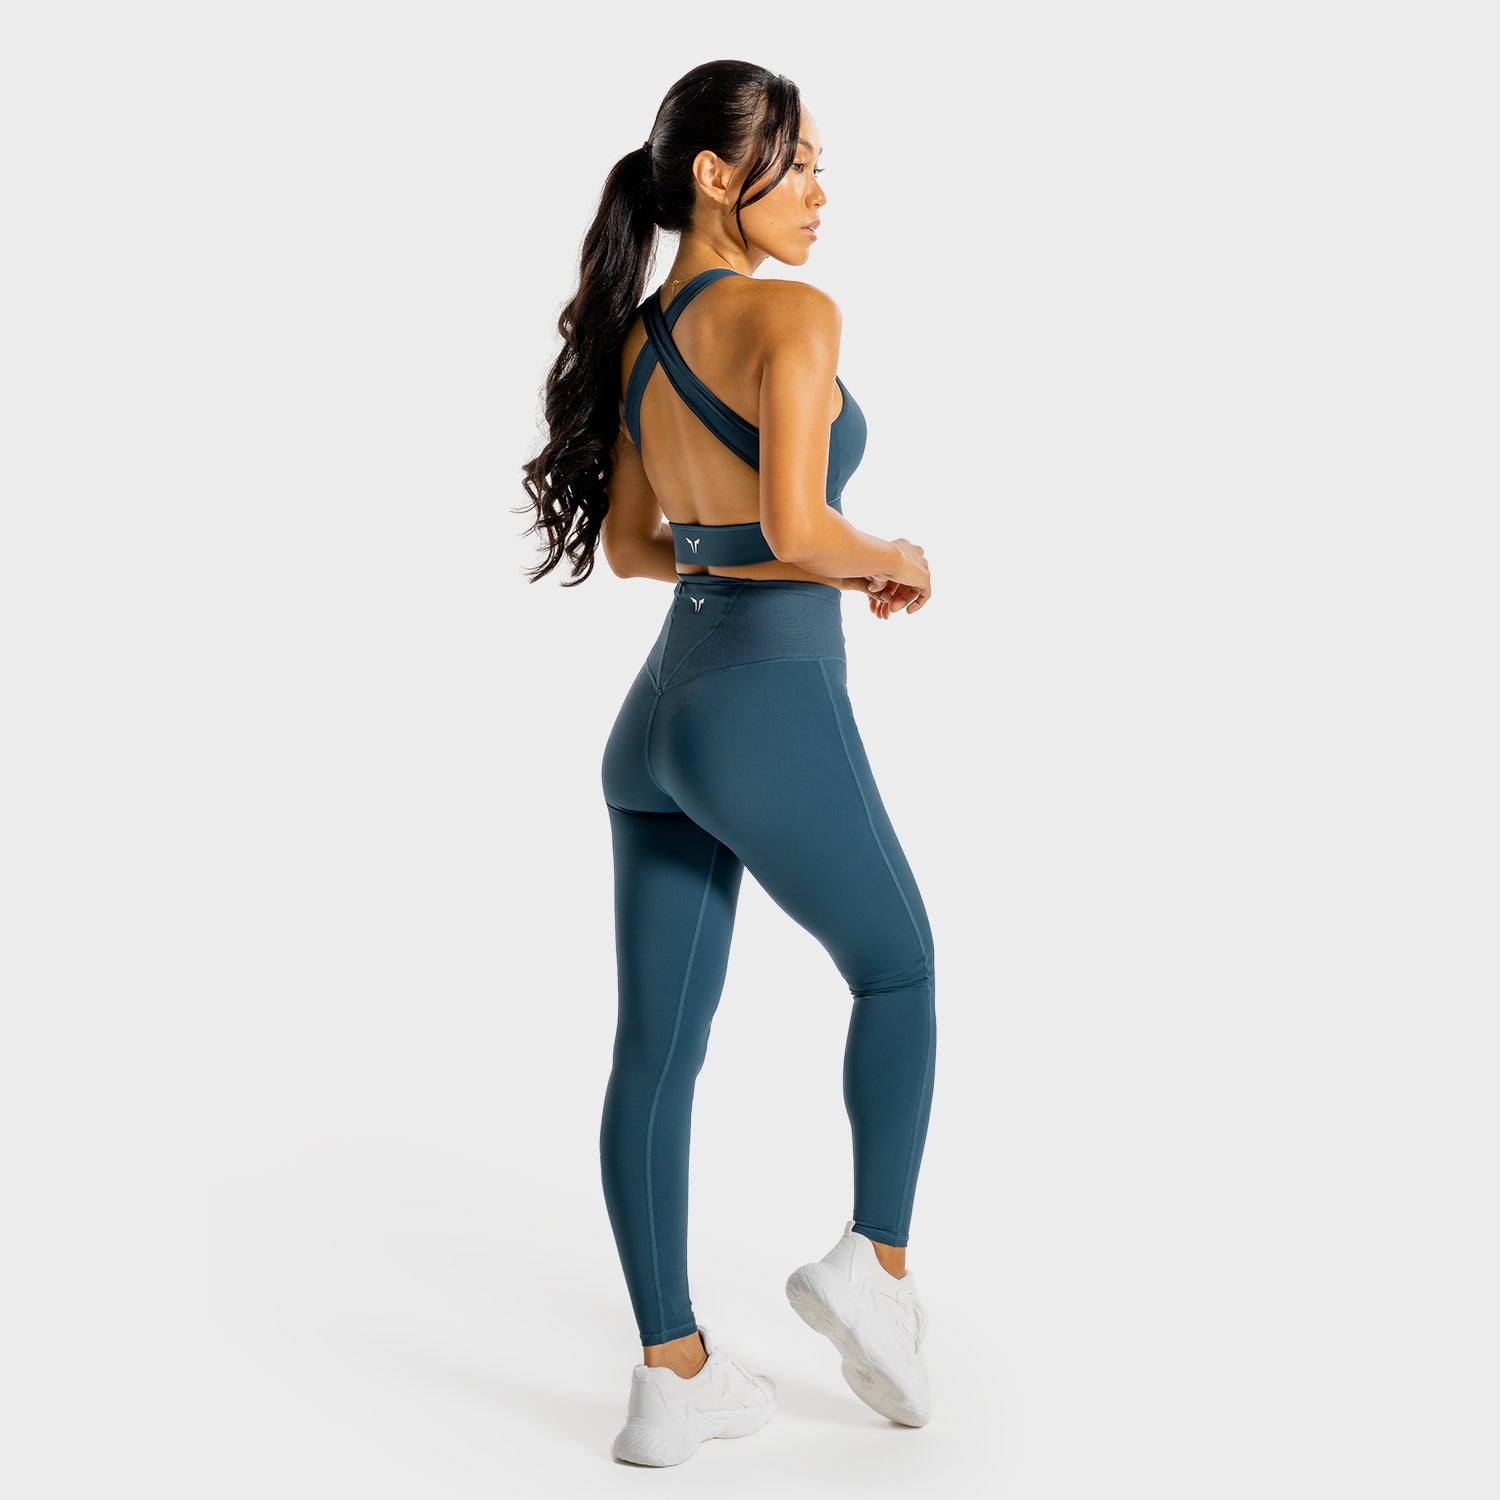 squatwolf-workout-clothes-core-leggings-blue-gym-leggings-for-women